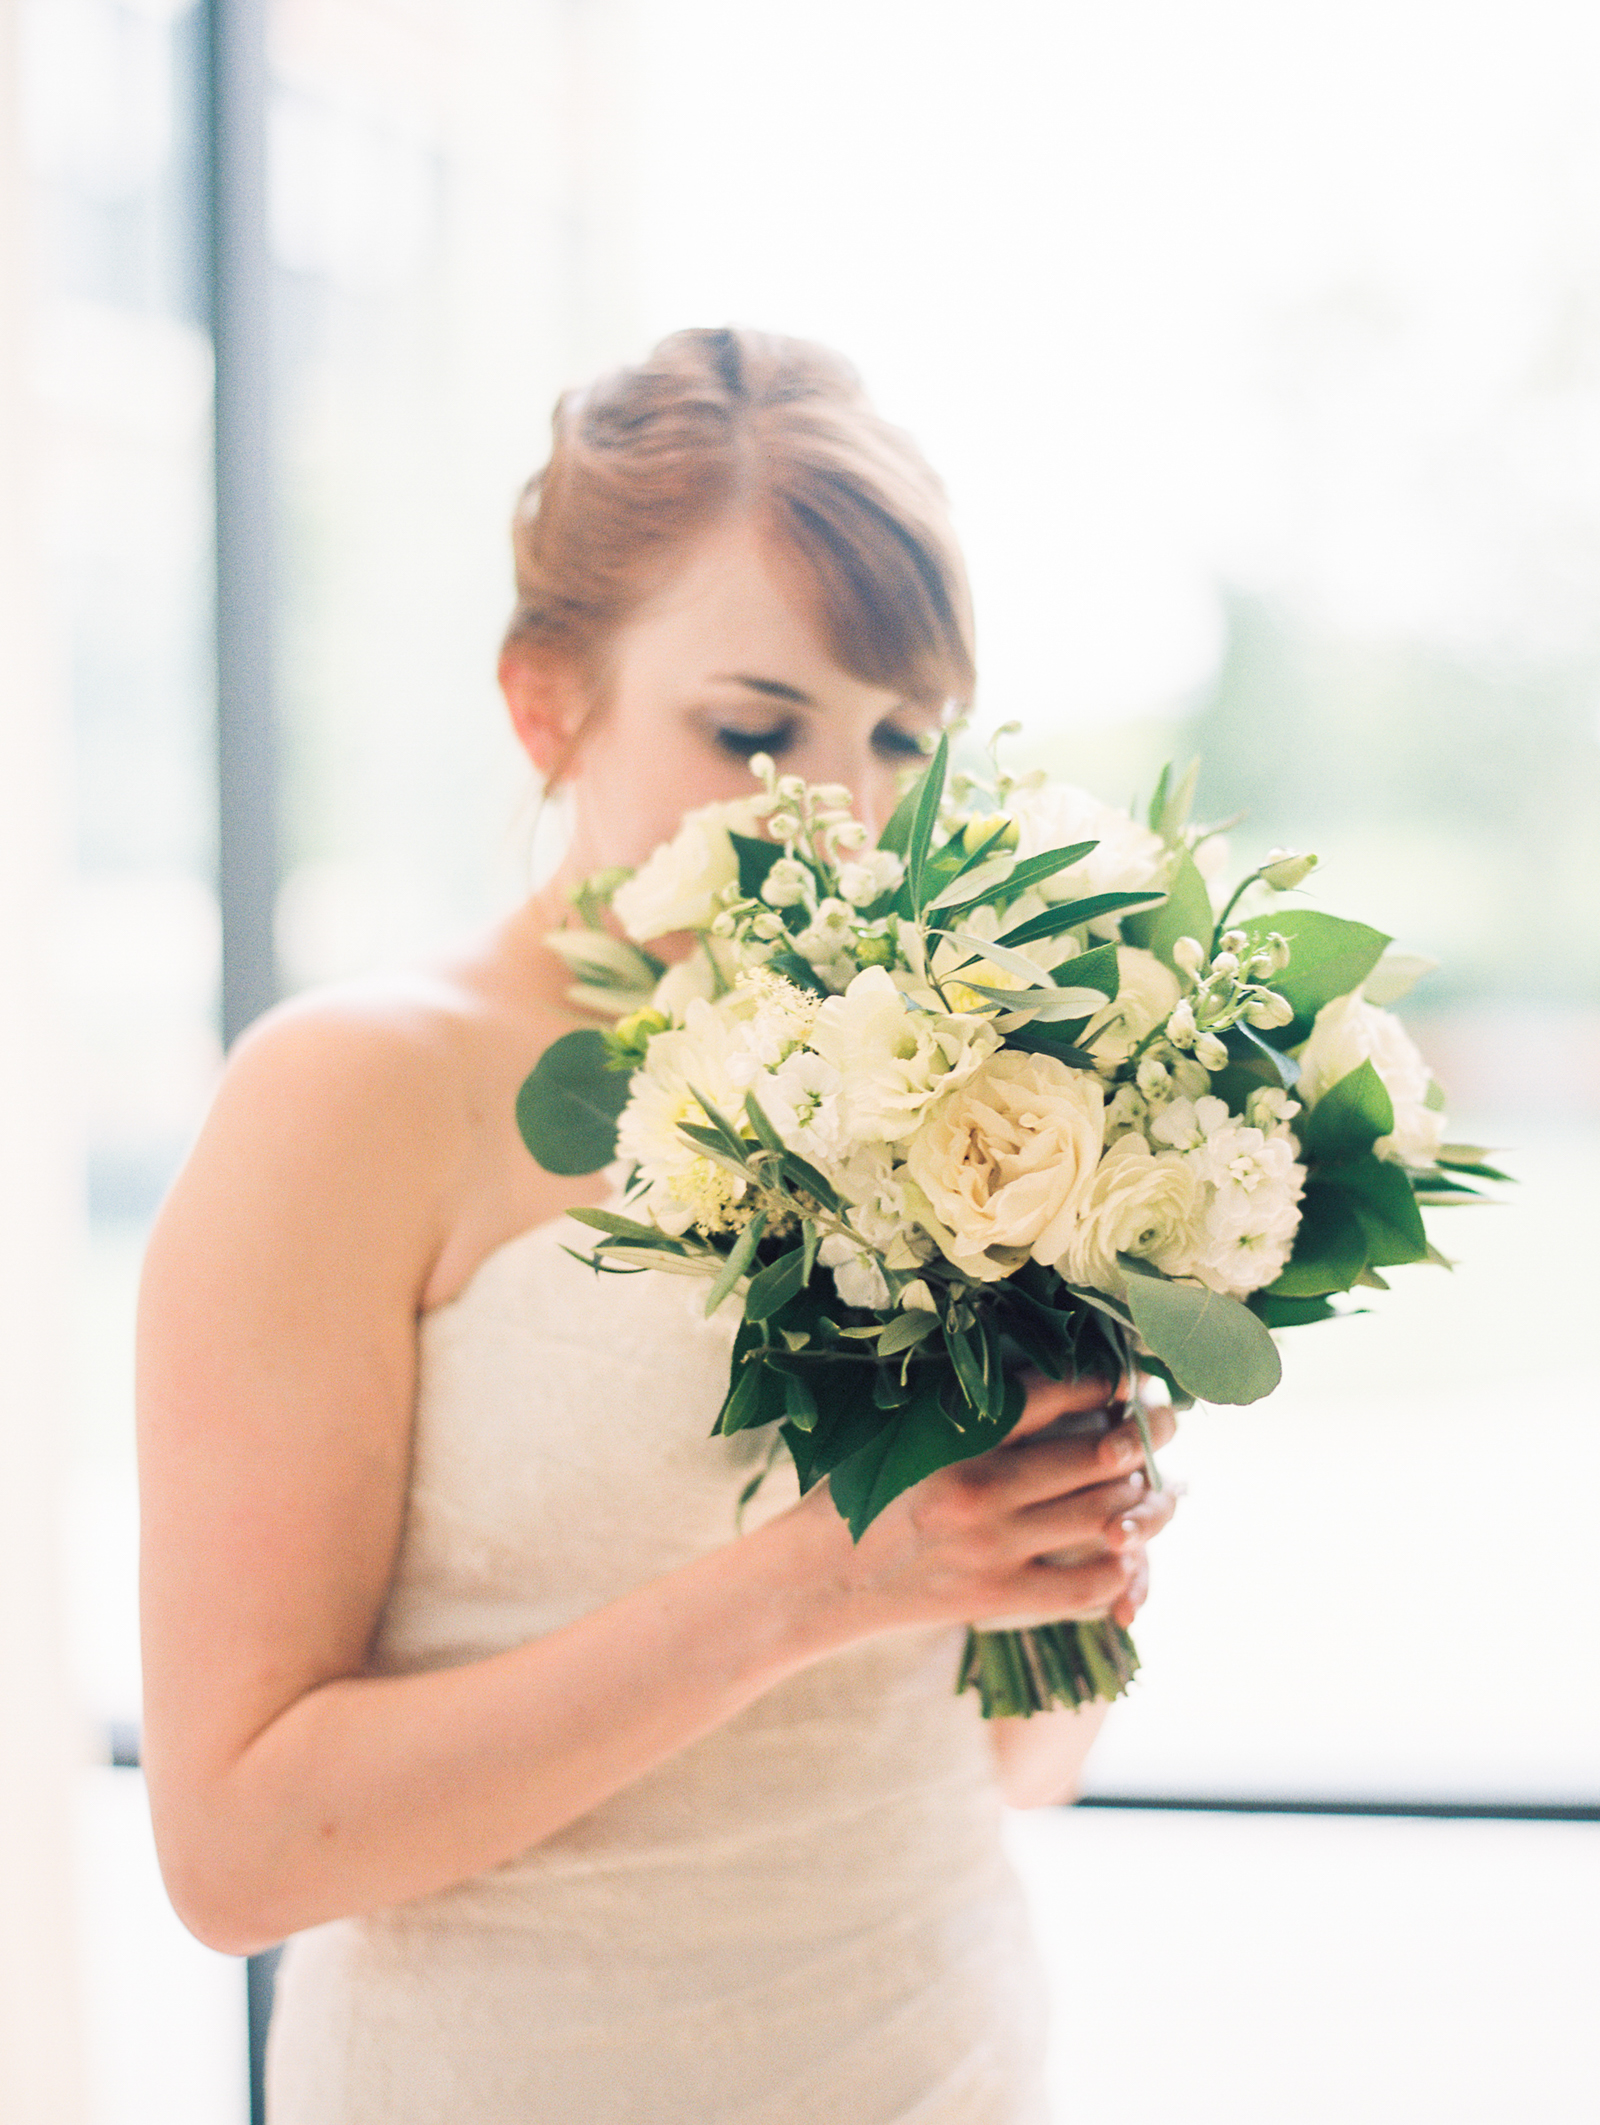 Minimalist and monochromatic fresh wedding bouquet of white dahlias, eucalyptus, ranunculus, and lisianthus.